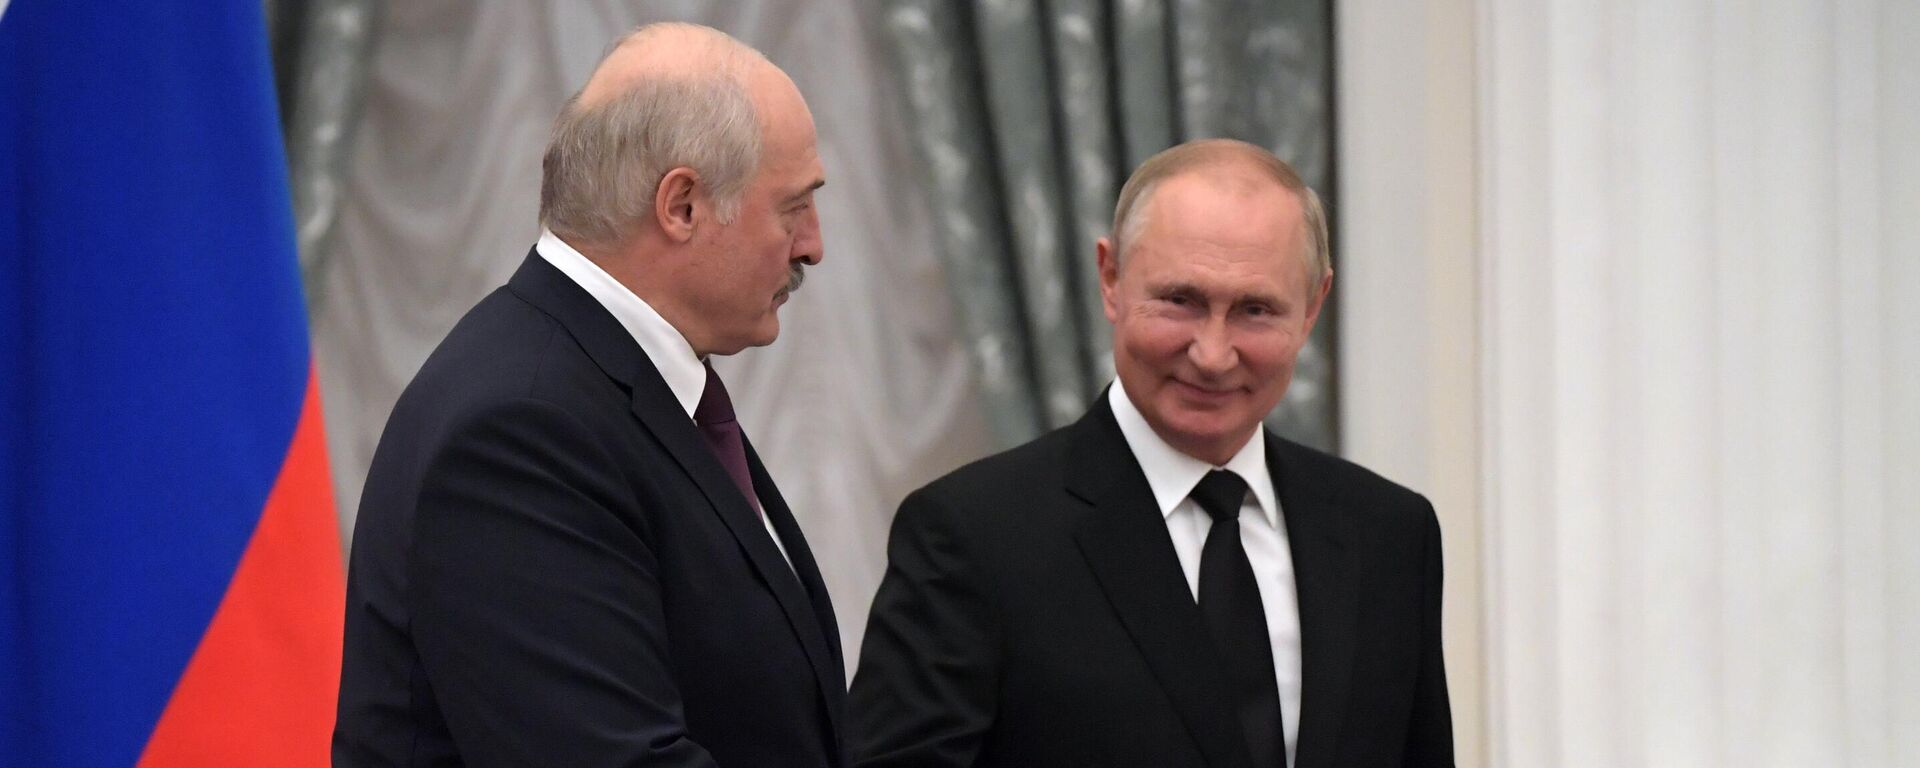 El presidente de Bielorrusia, Alexandr Lukashenko, y el presidente de Rusia, Vladímir Putin - Sputnik Mundo, 1920, 24.12.2021